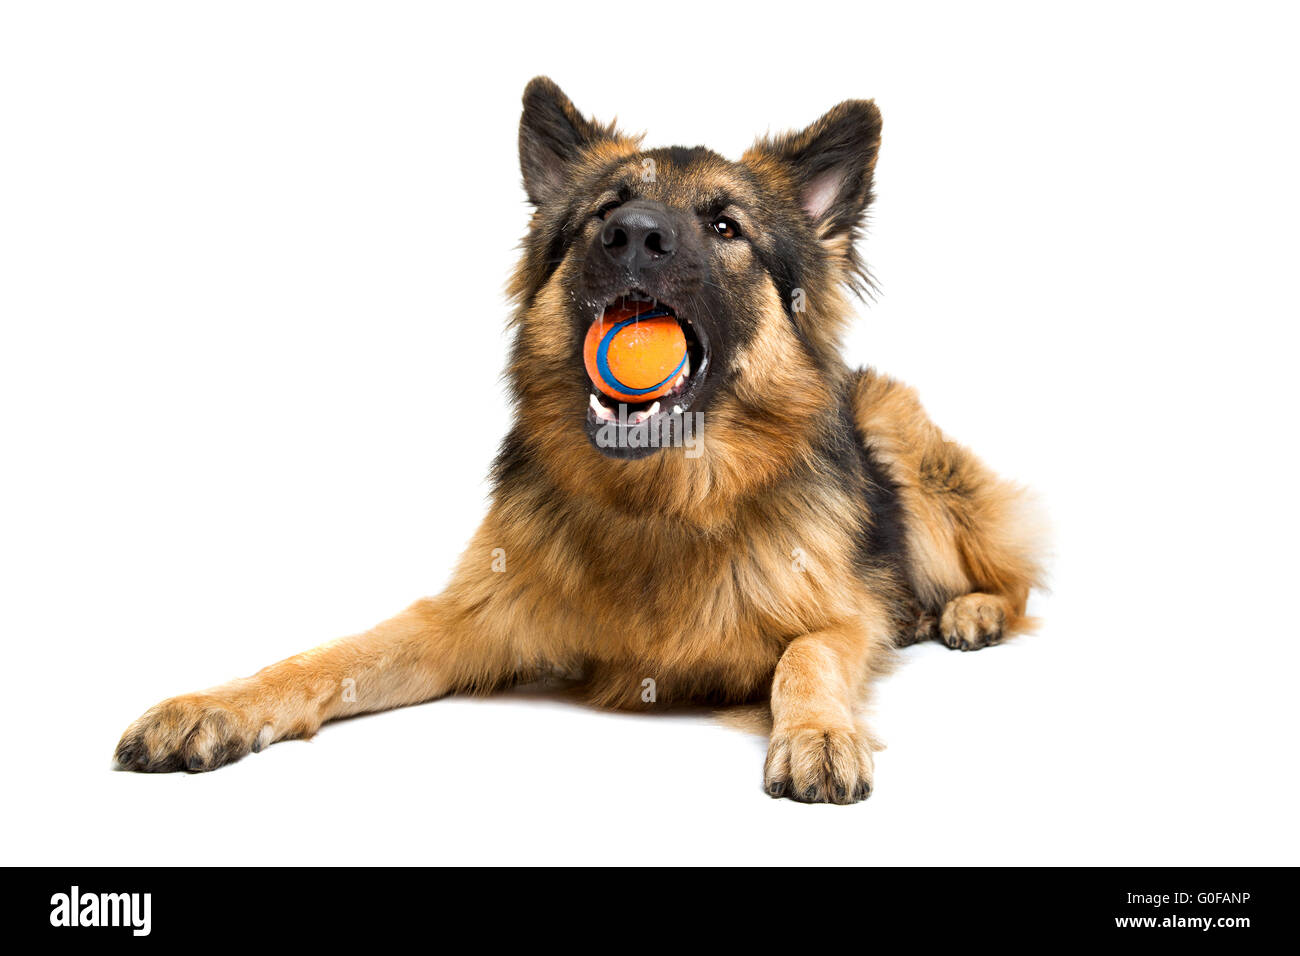 German shepherd chewing an orange ball Stock Photo